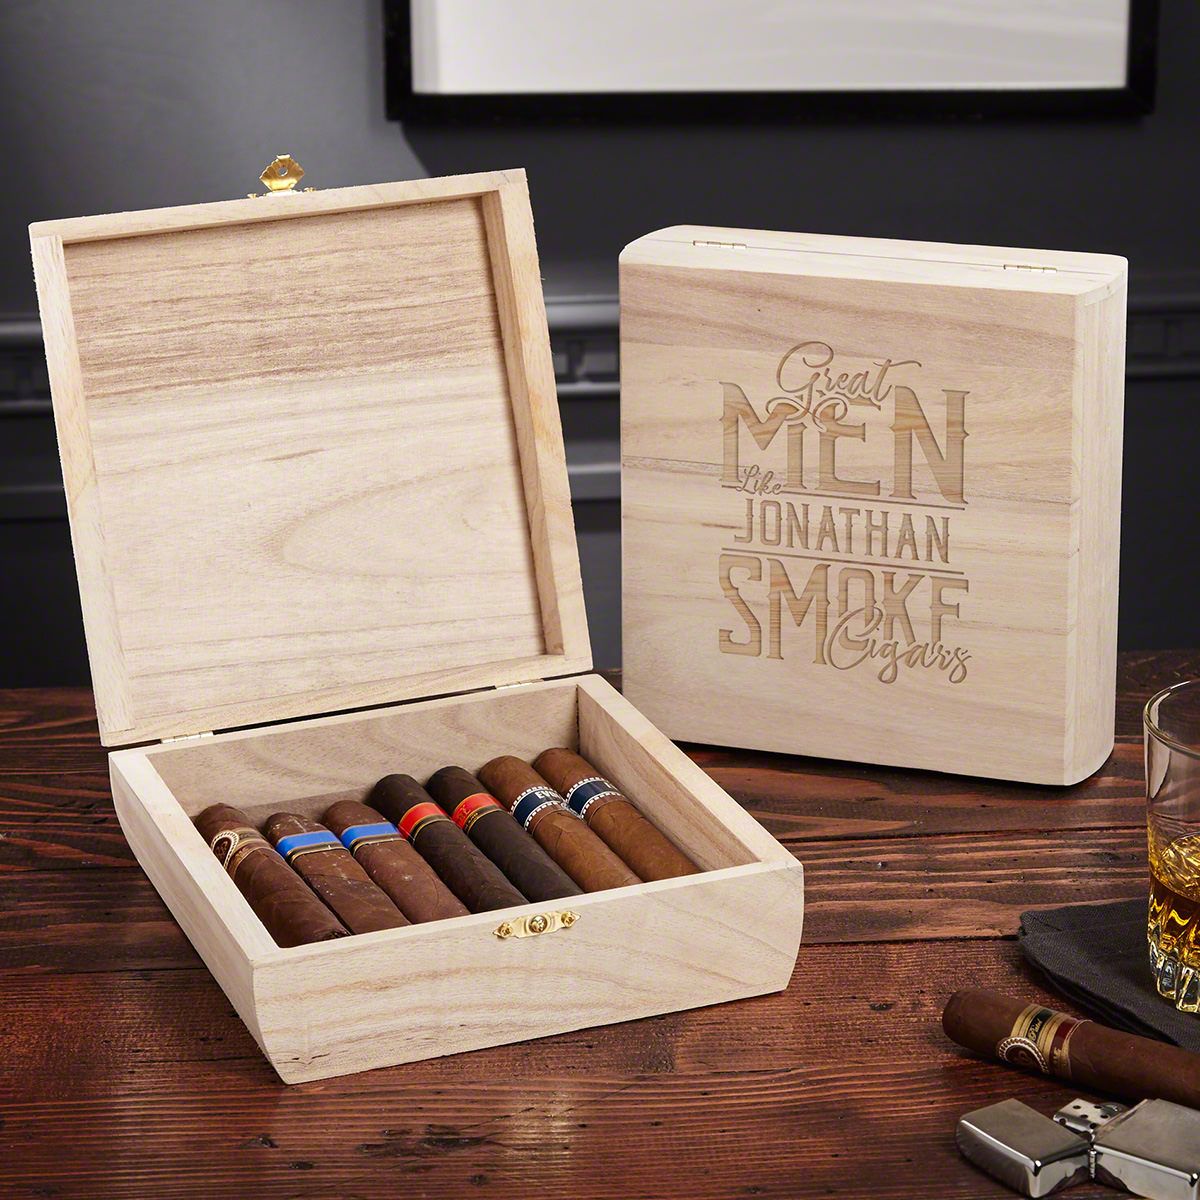 Great Men Smoke Cigars Square Vintage Wooden Box
